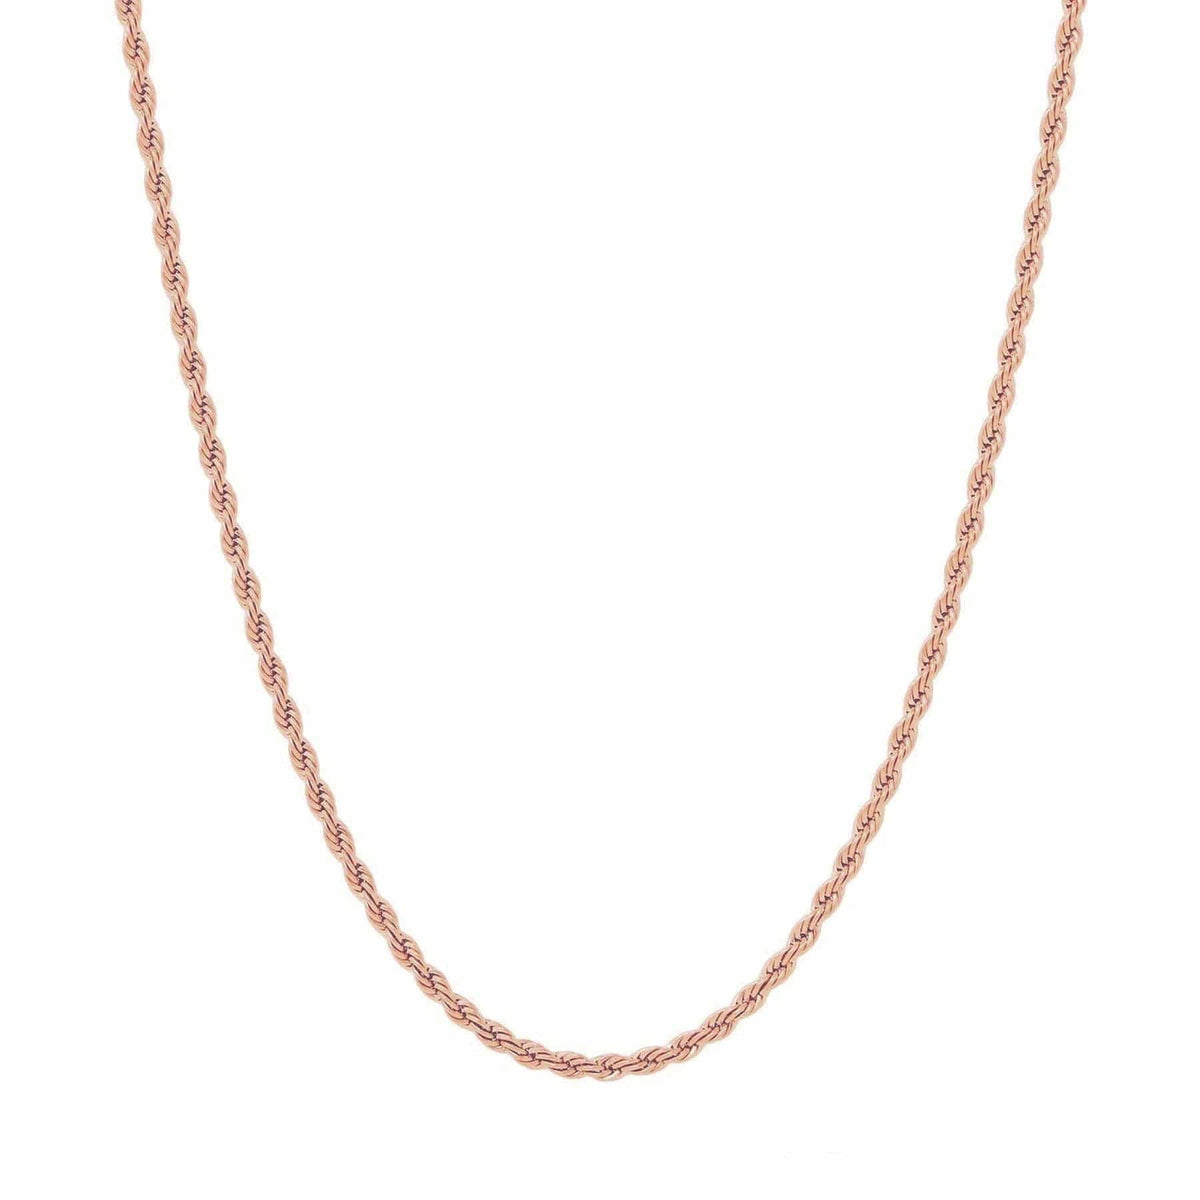 BohoMoon Stainless Steel Beverley Rope Choker / Necklace Rose Gold / Choker